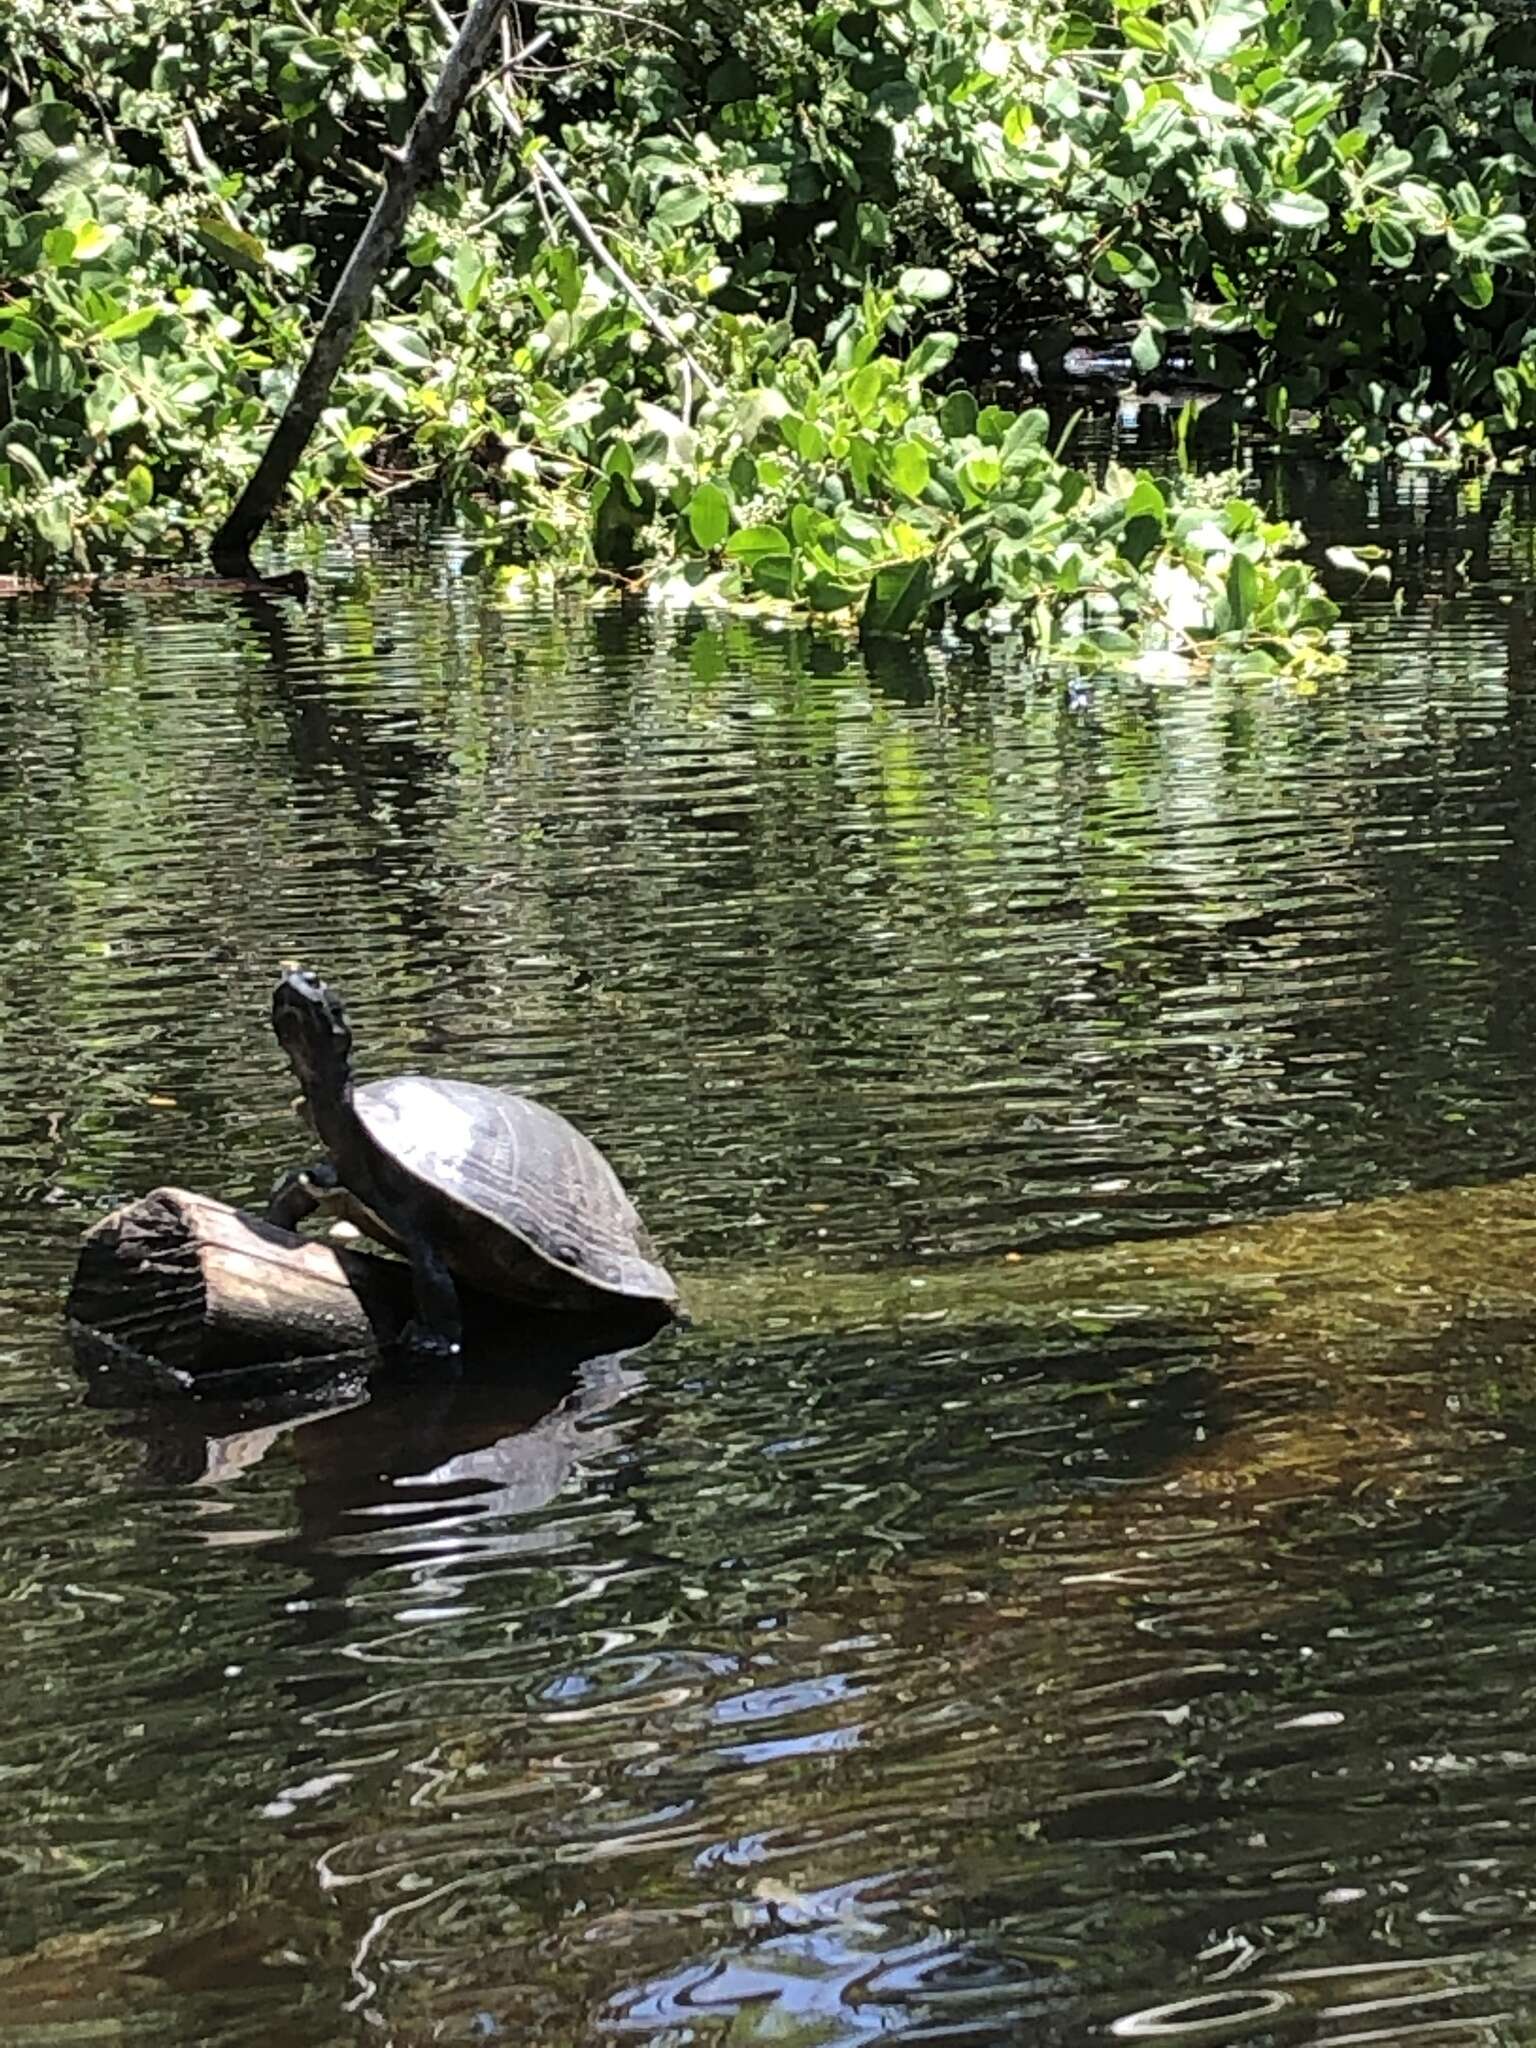 Image of Hispaniolan Slider Turtle